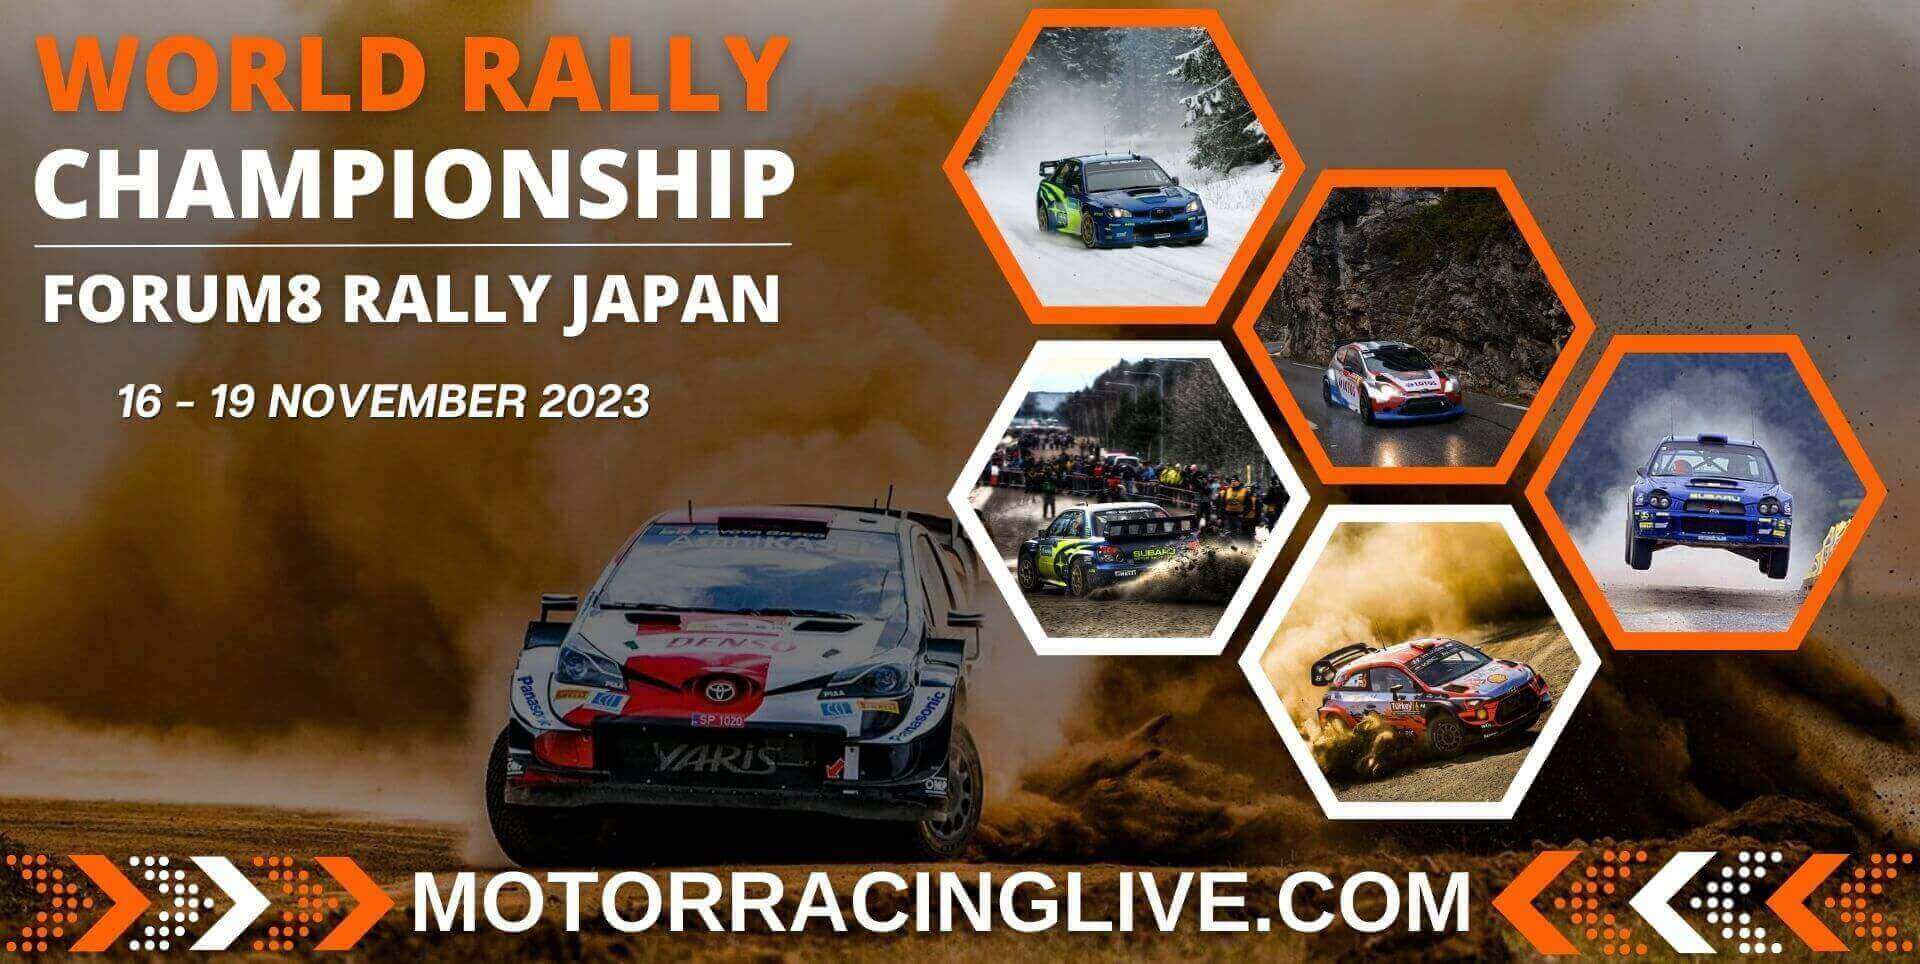 WRC FORUM8 Rally Japan Round 13 Live Stream 2023